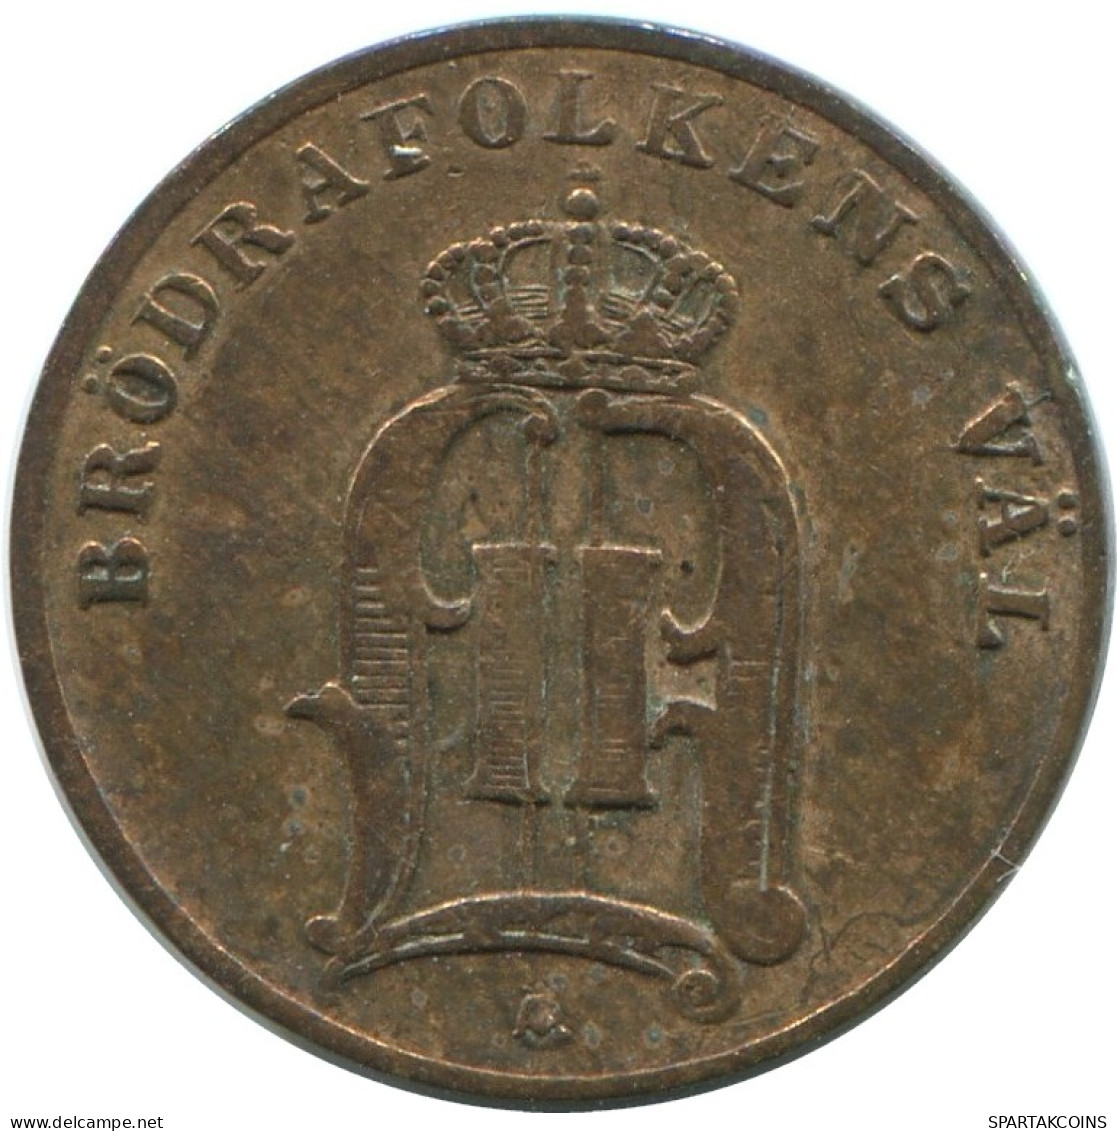 1 ORE 1891 SWEDEN Coin #AD415.2.U.A - Sweden